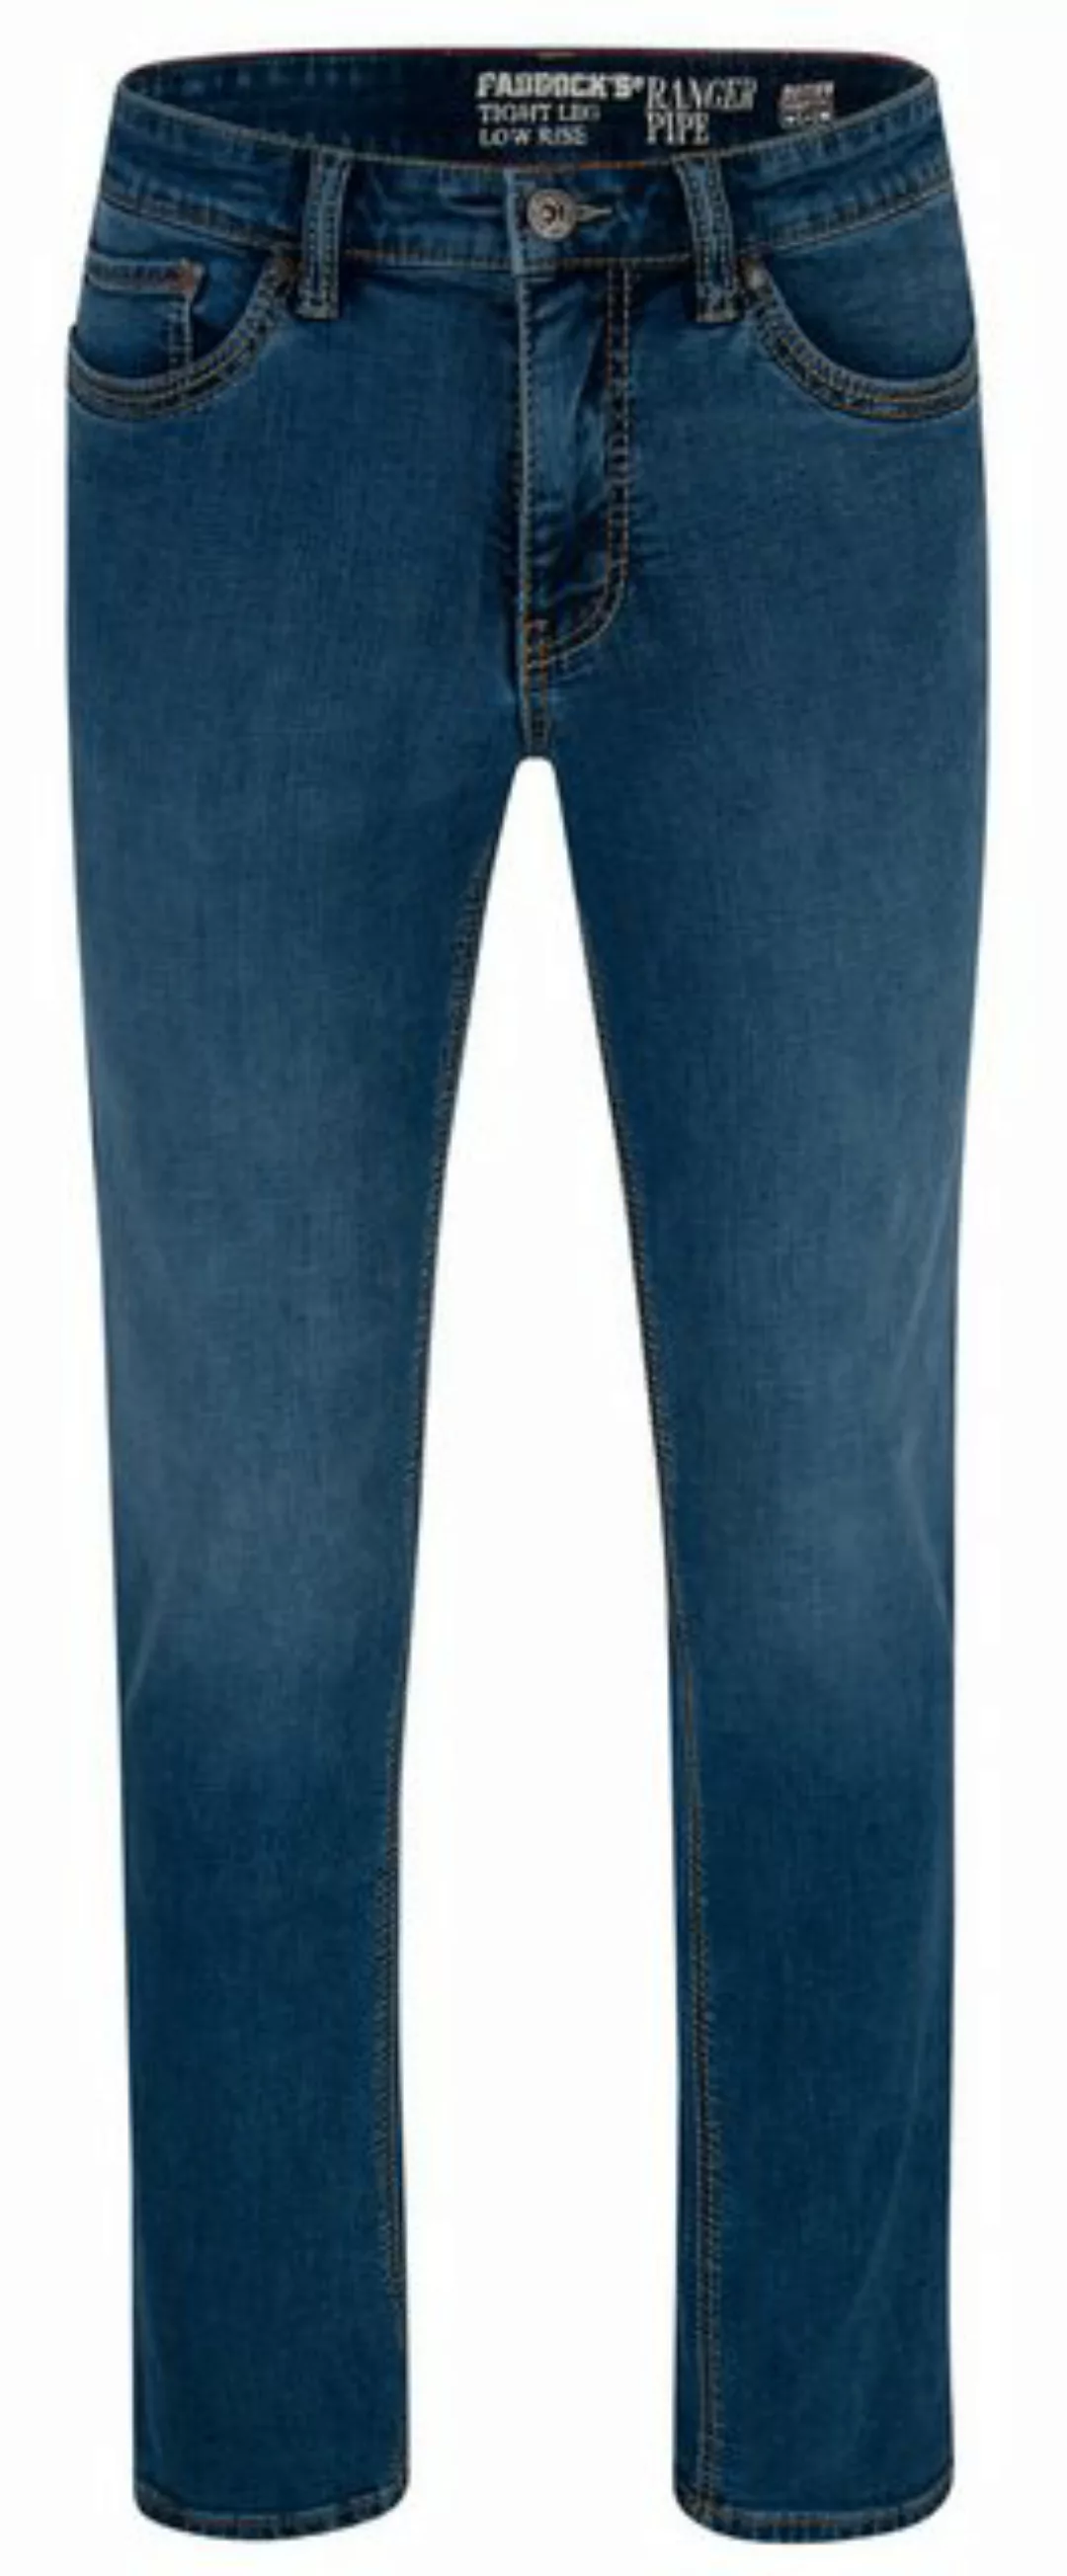 Paddock's 5-Pocket-Jeans PADDOCKS RANGER PIPE Saddle Stitch medium blue 801 günstig online kaufen